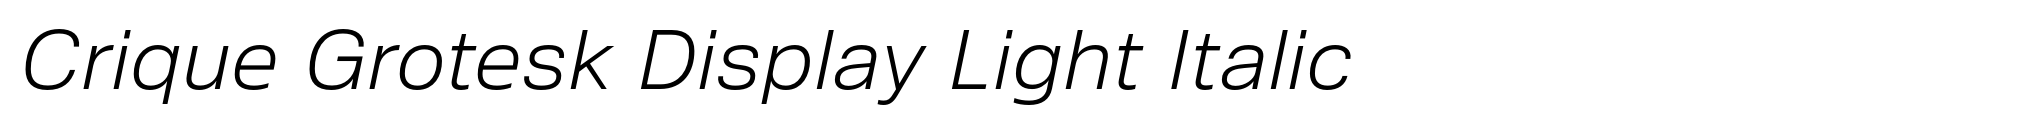 Crique Grotesk Display Light Italic image